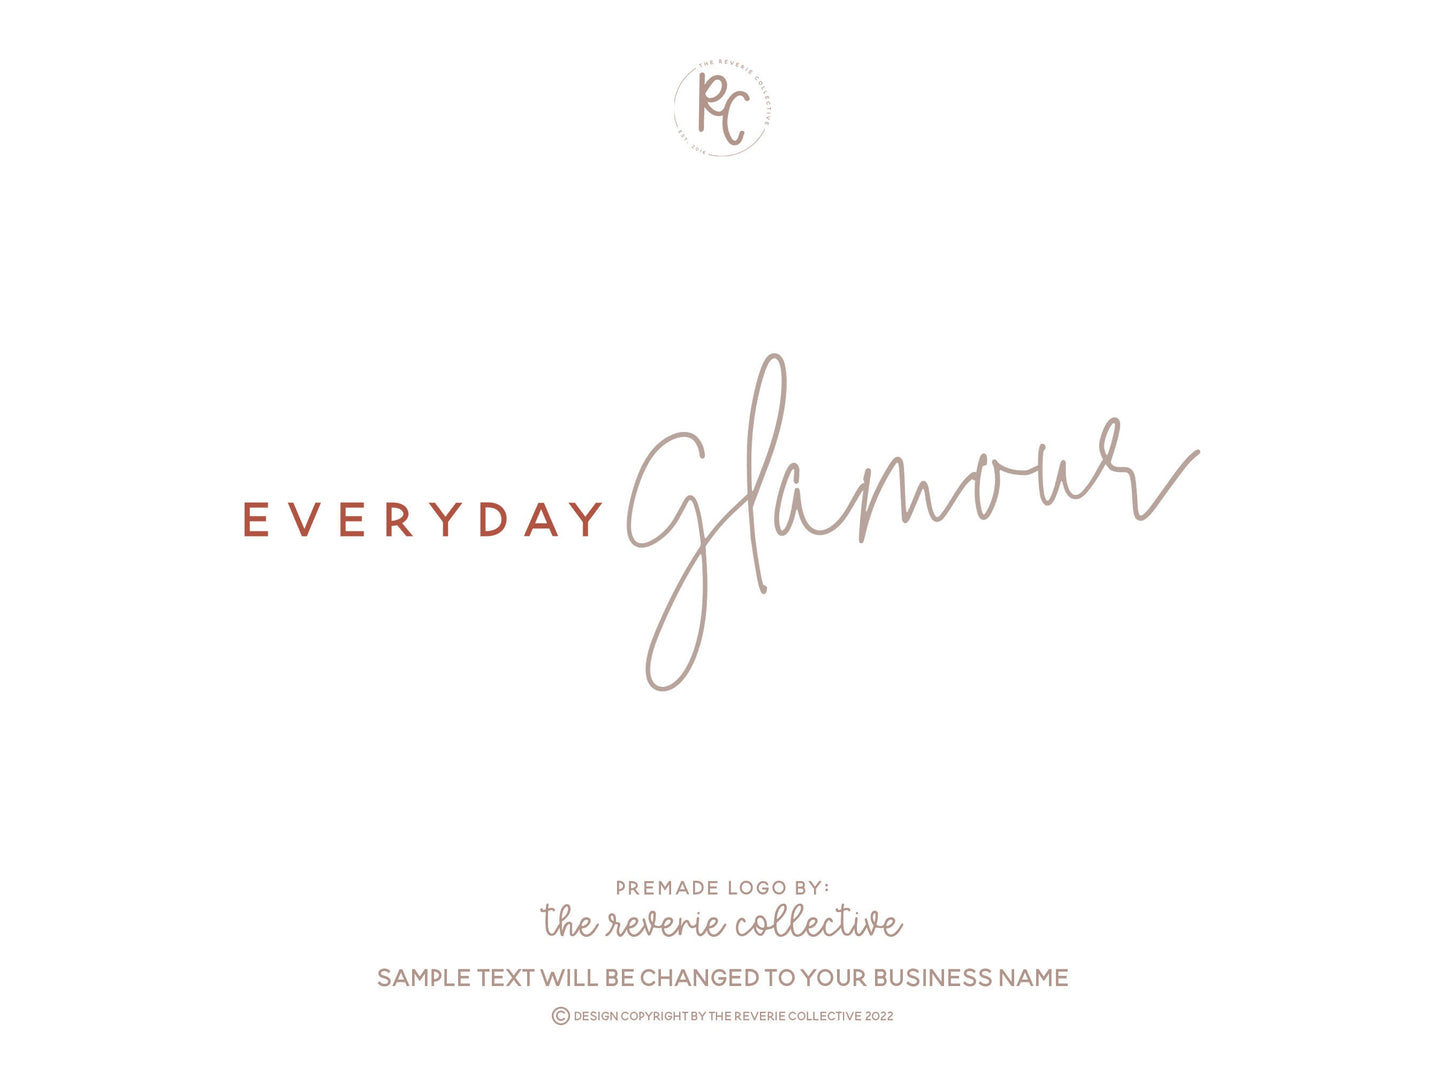 Everyday Glamour | Premade Logo Design | Boho, Neutral, Minimal, Modern